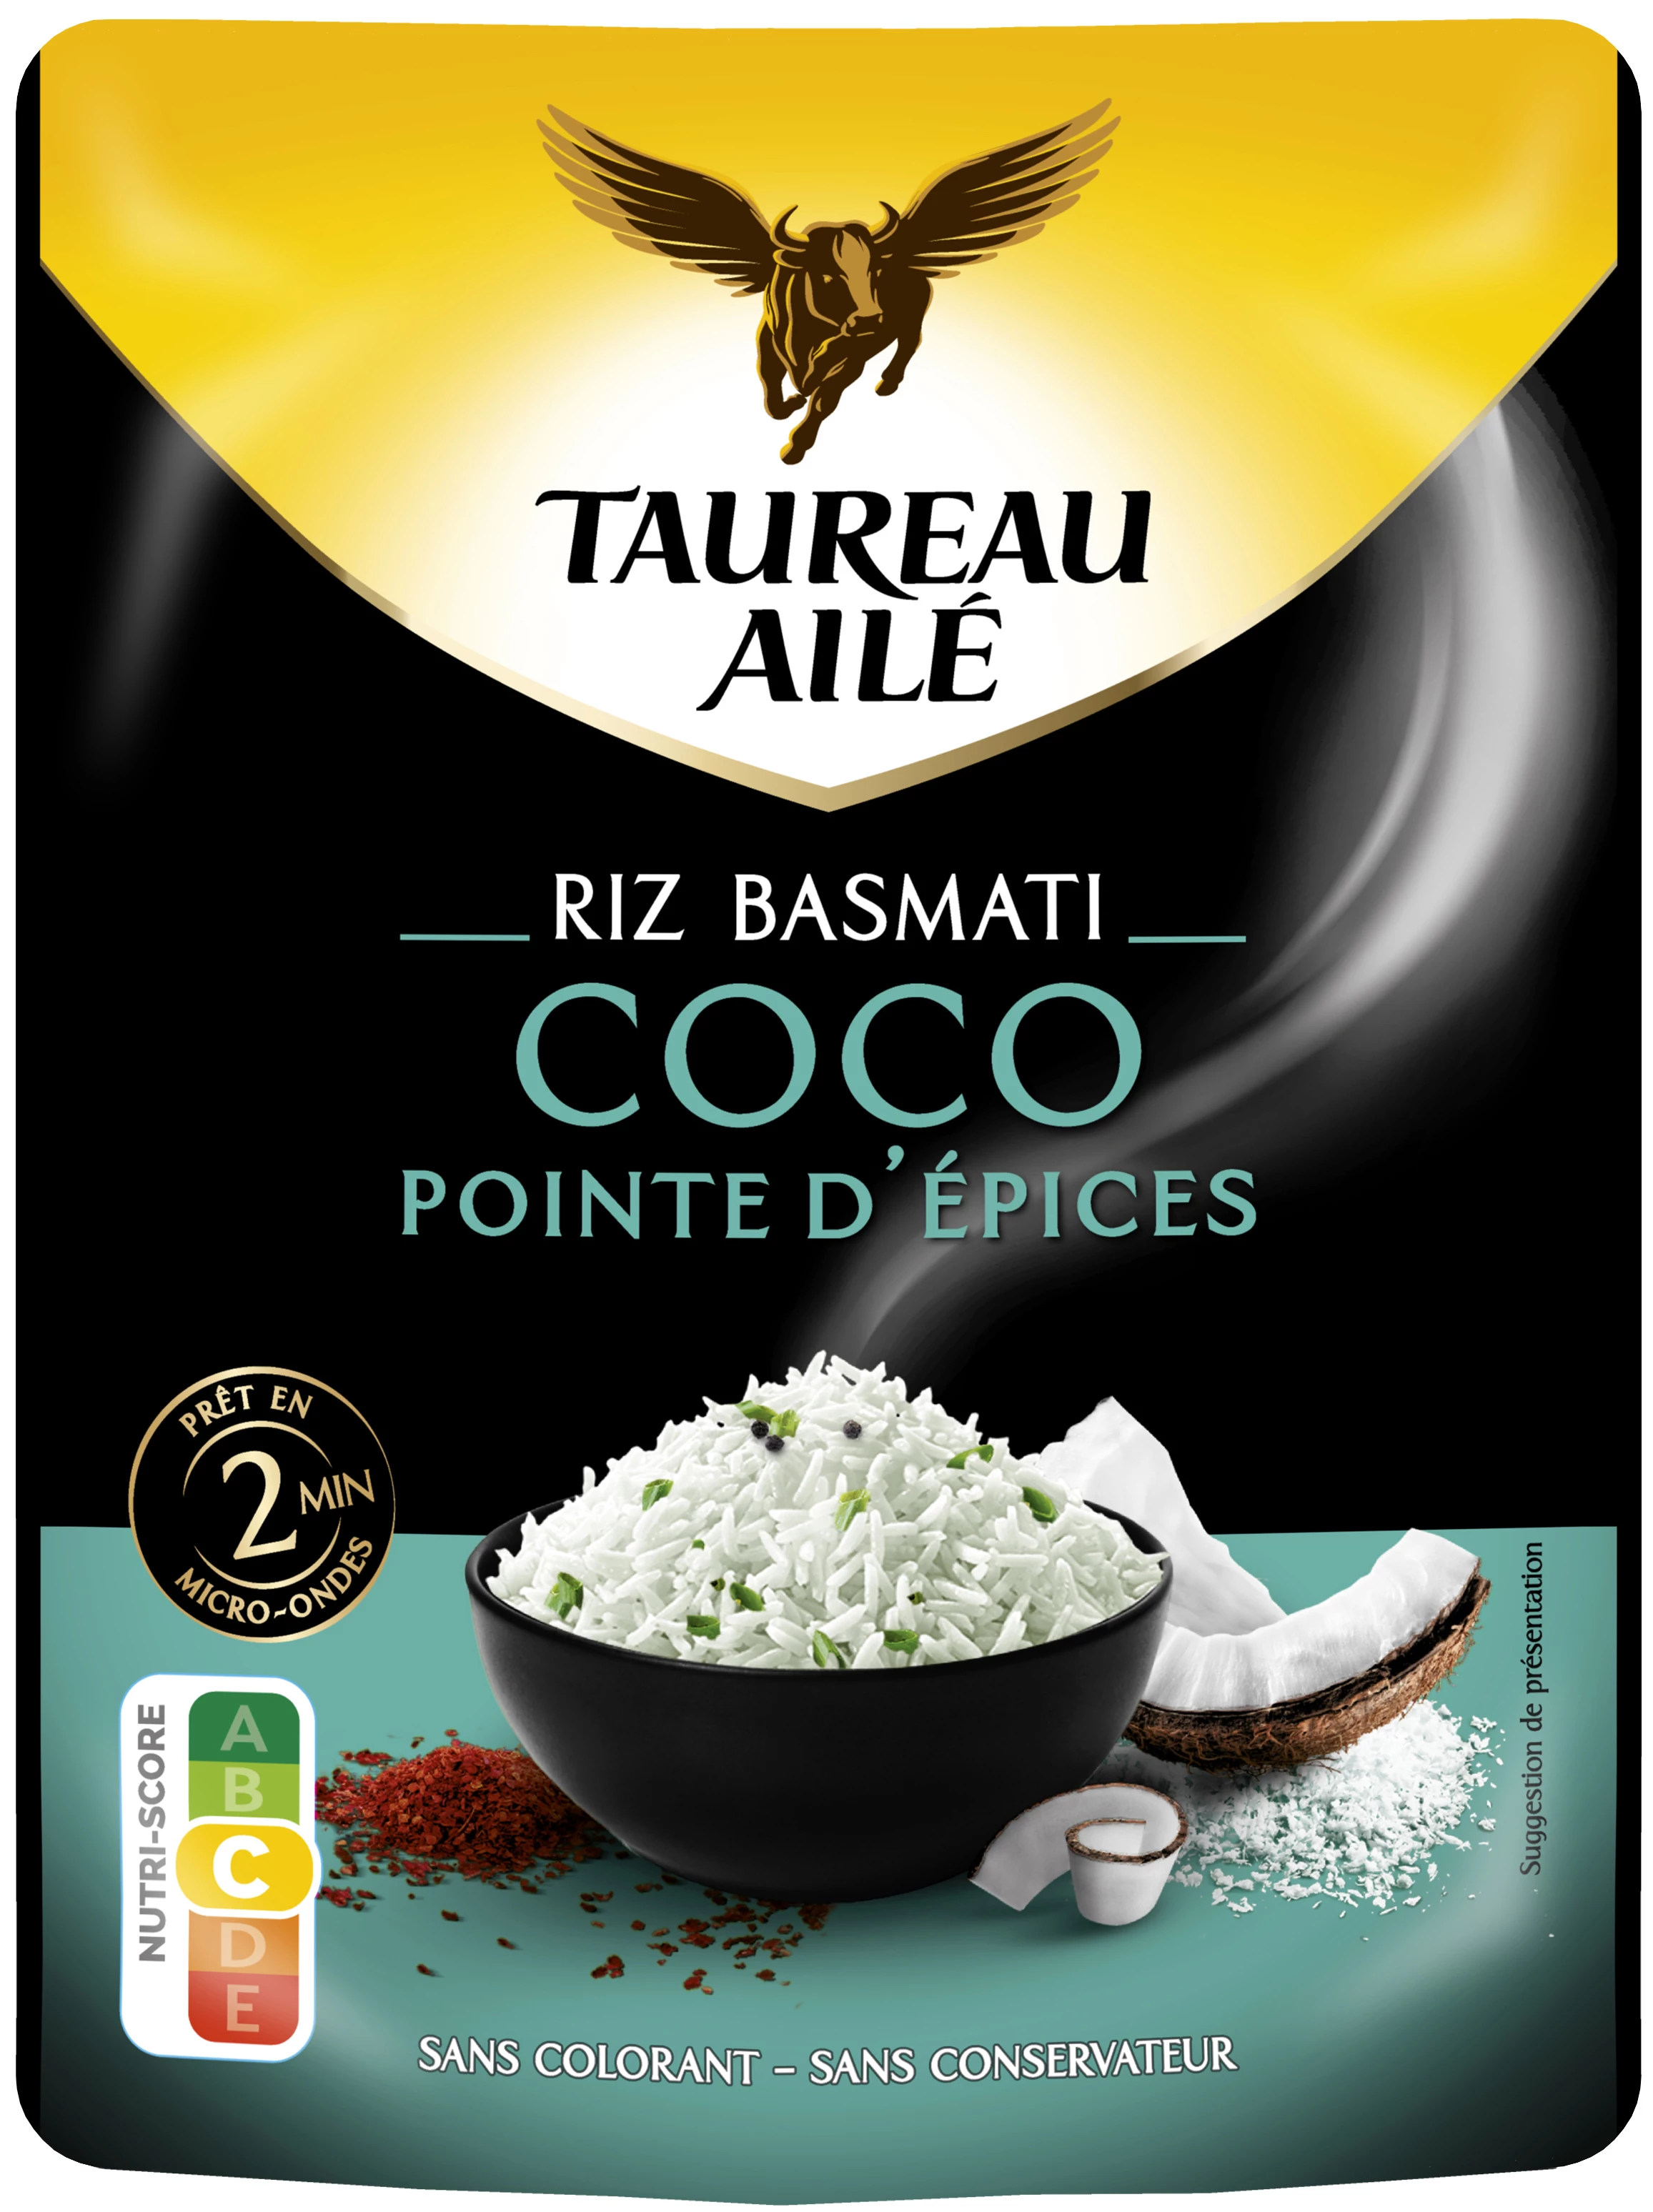 Riz Basmati Coco, 250g - TAUREAU AILÉ